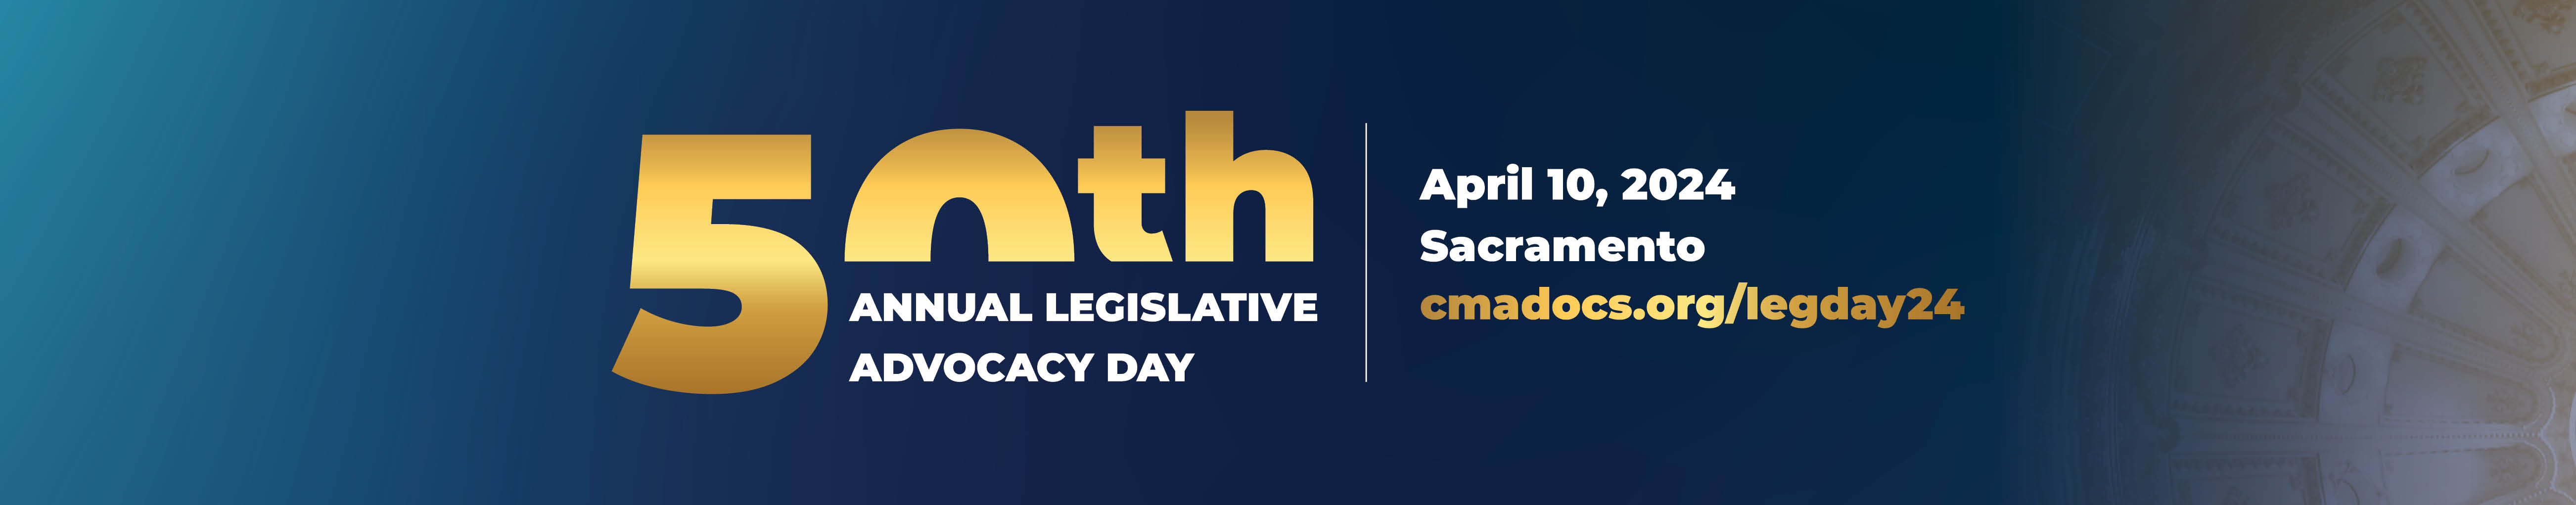 Legislative Advocacy Day